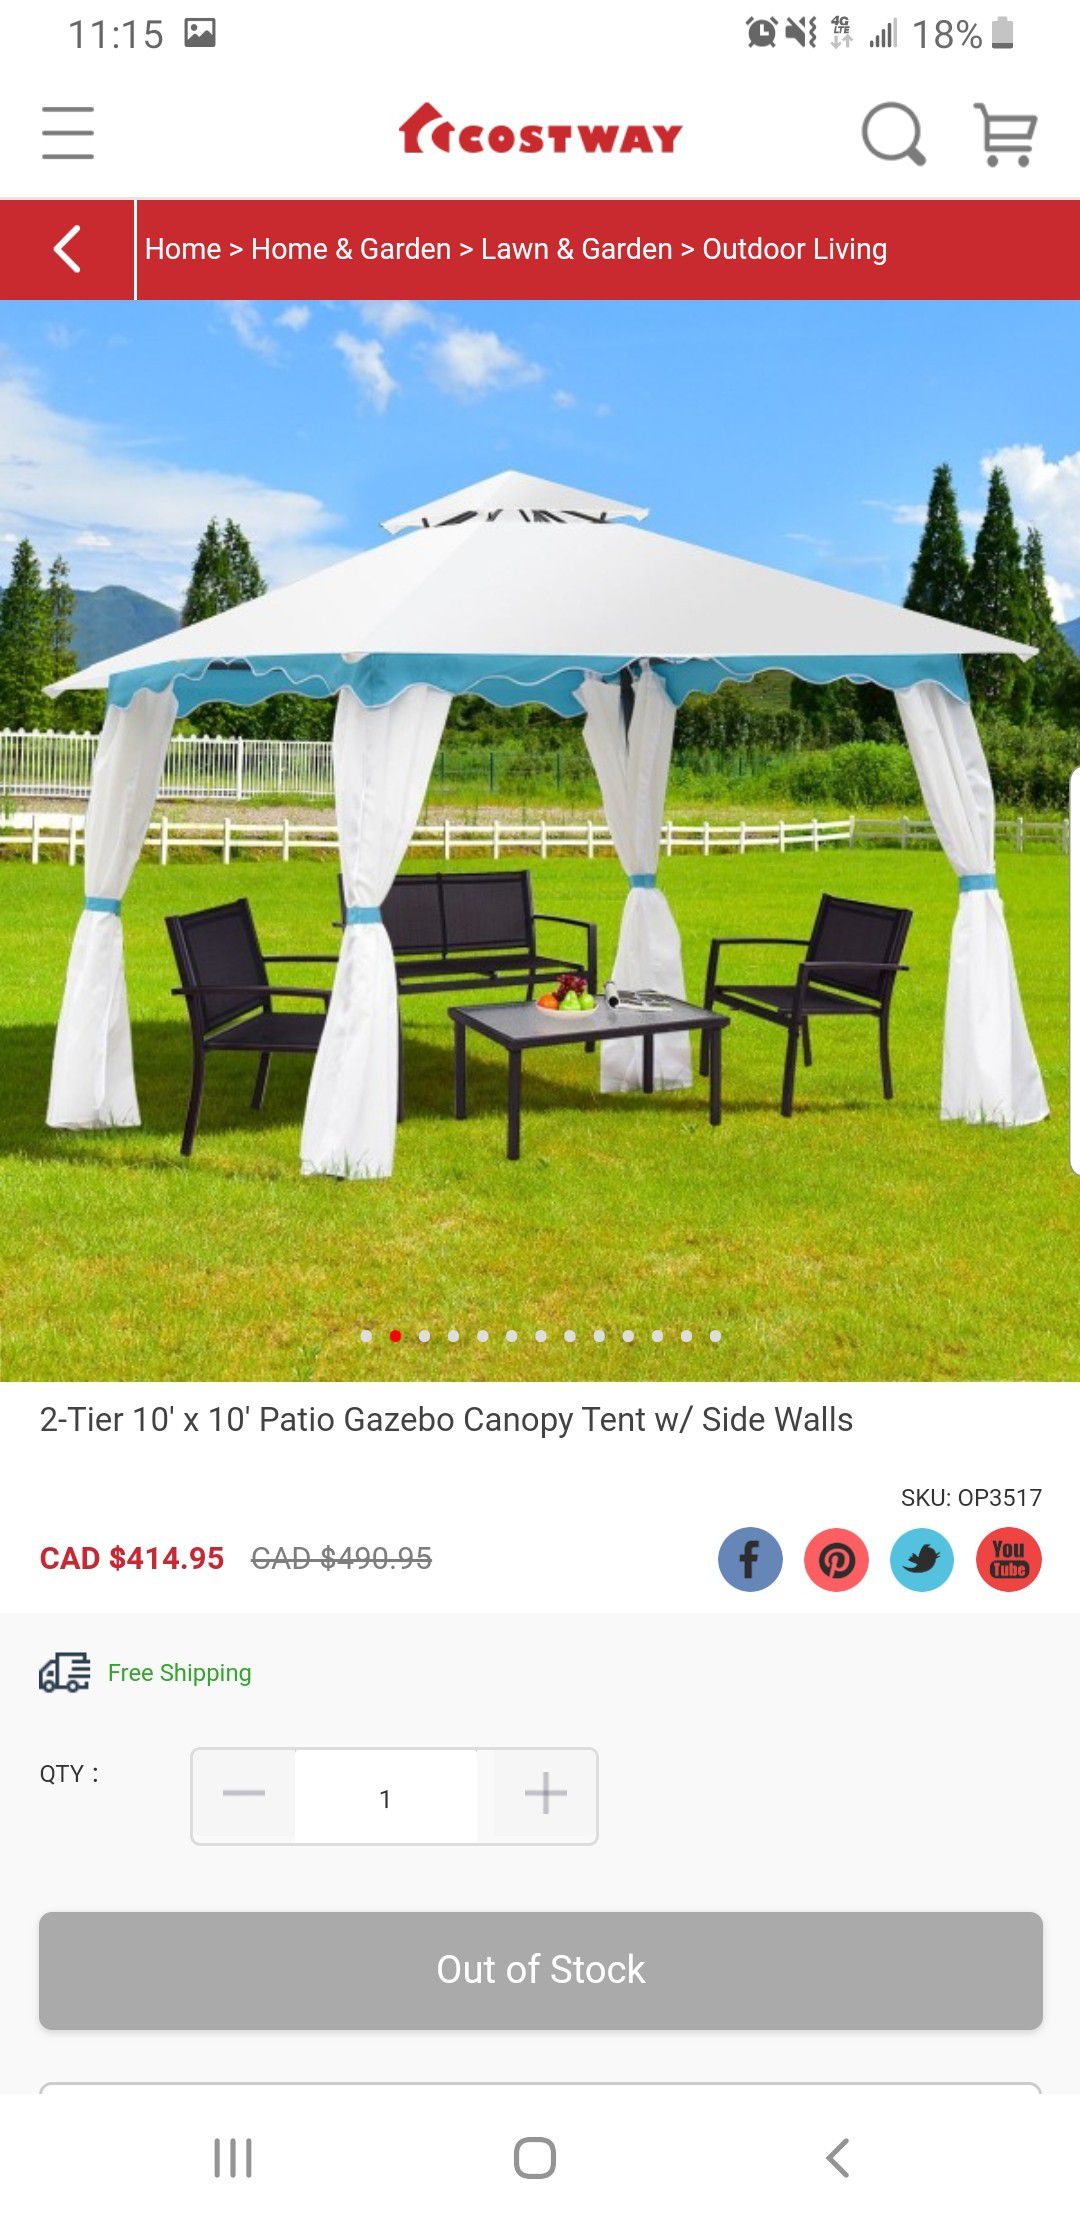 10x10 Gazebo Canopy Tent w/ Side Walls